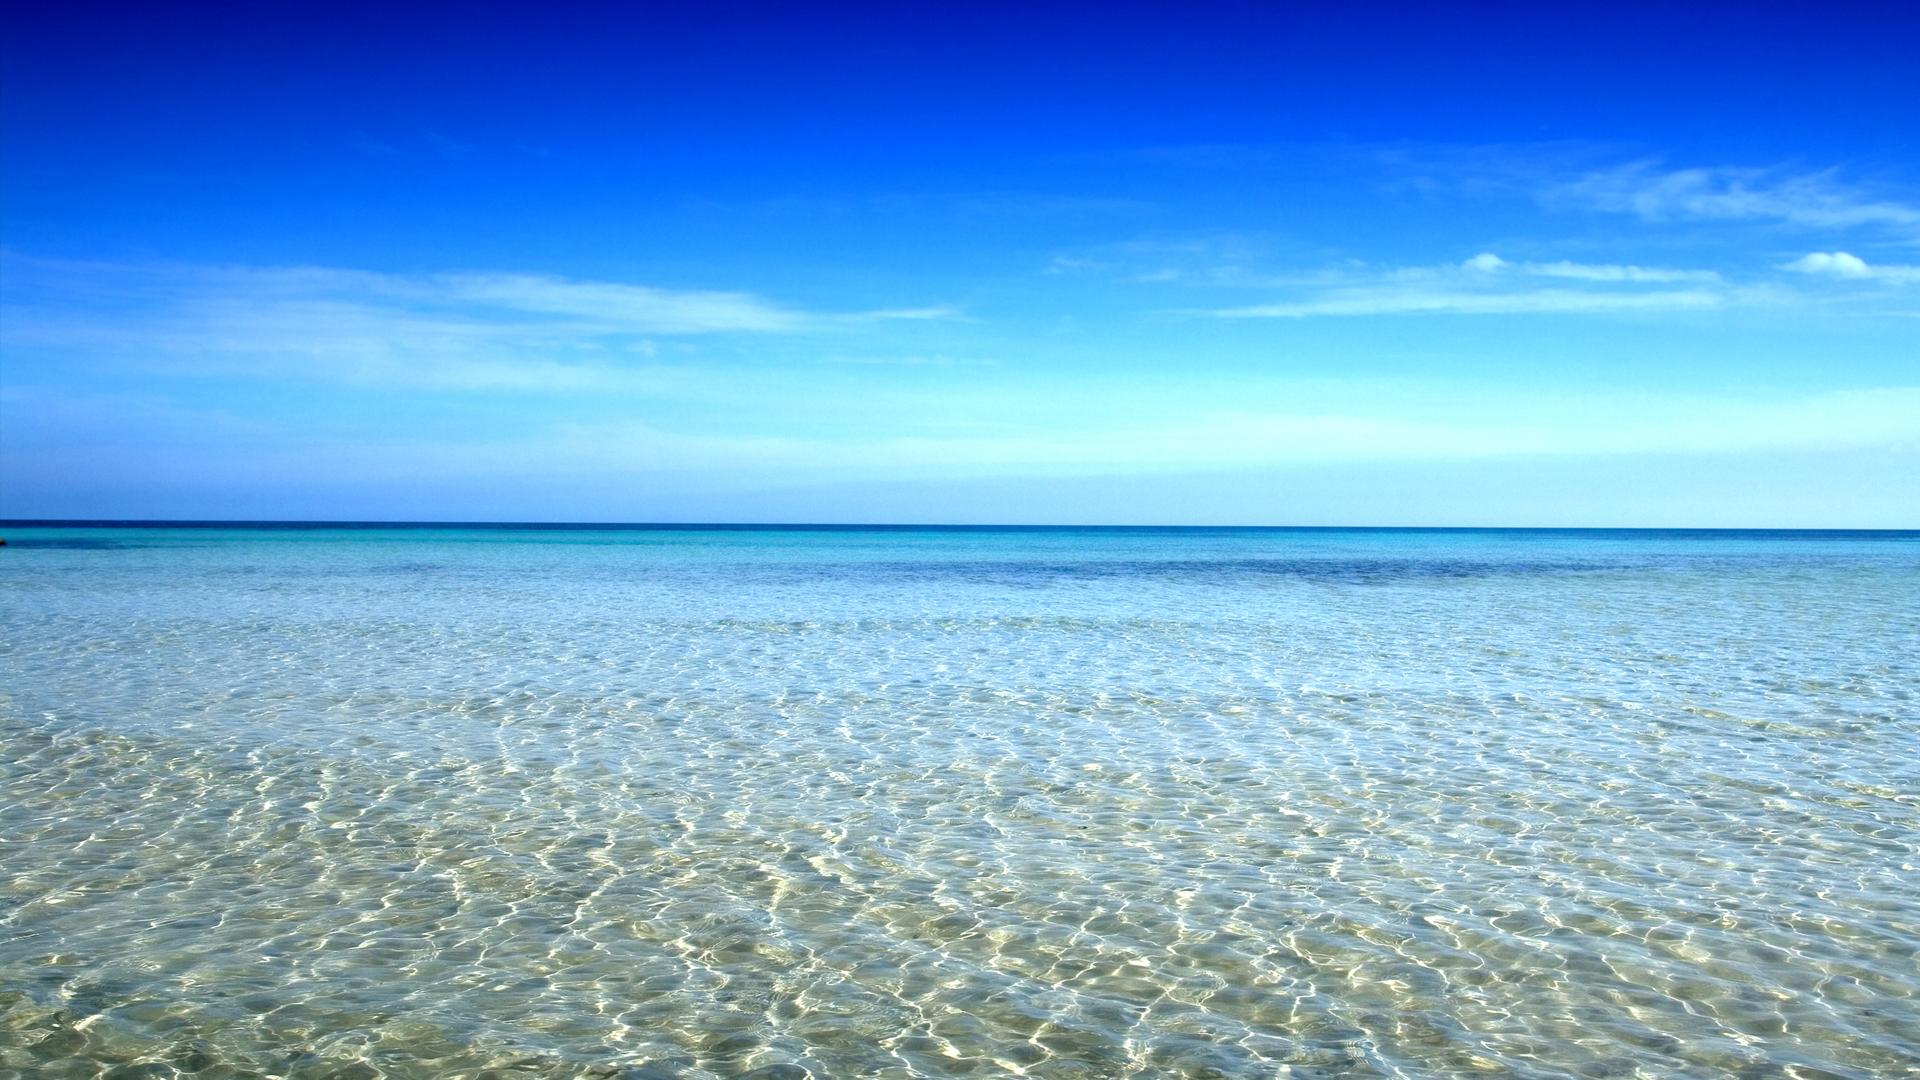 Ocean Wallpaper, Blue Beach Natural Image